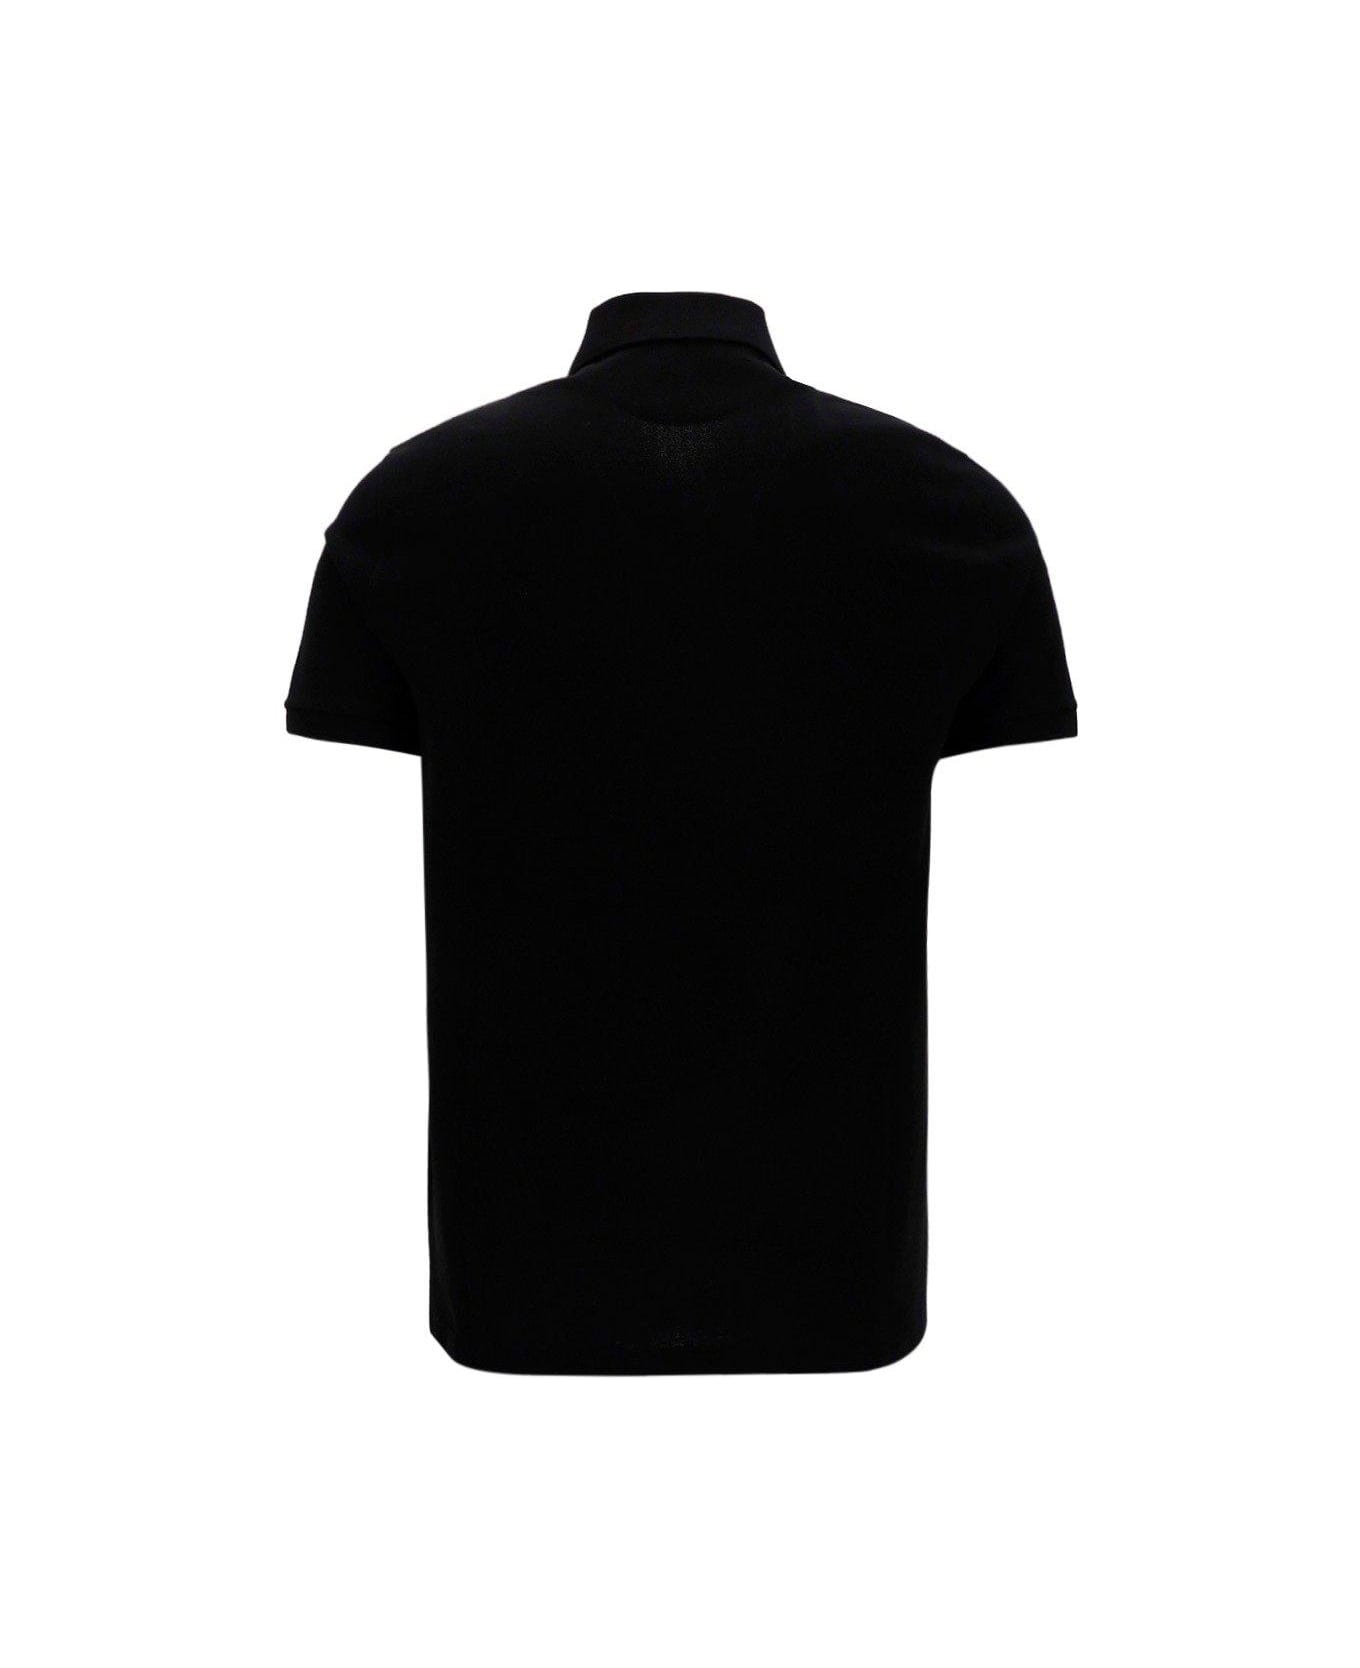 Valentino Vltn Tag Short-sleeved Polo Shirt - Black シャツ